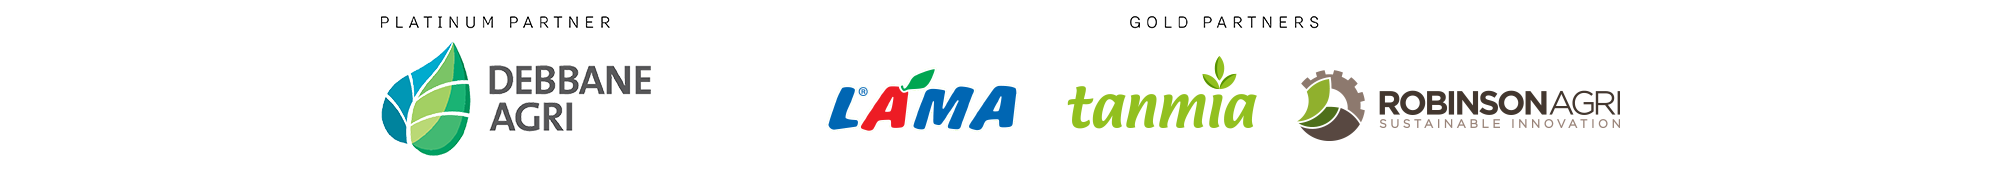 sponsors logo strip